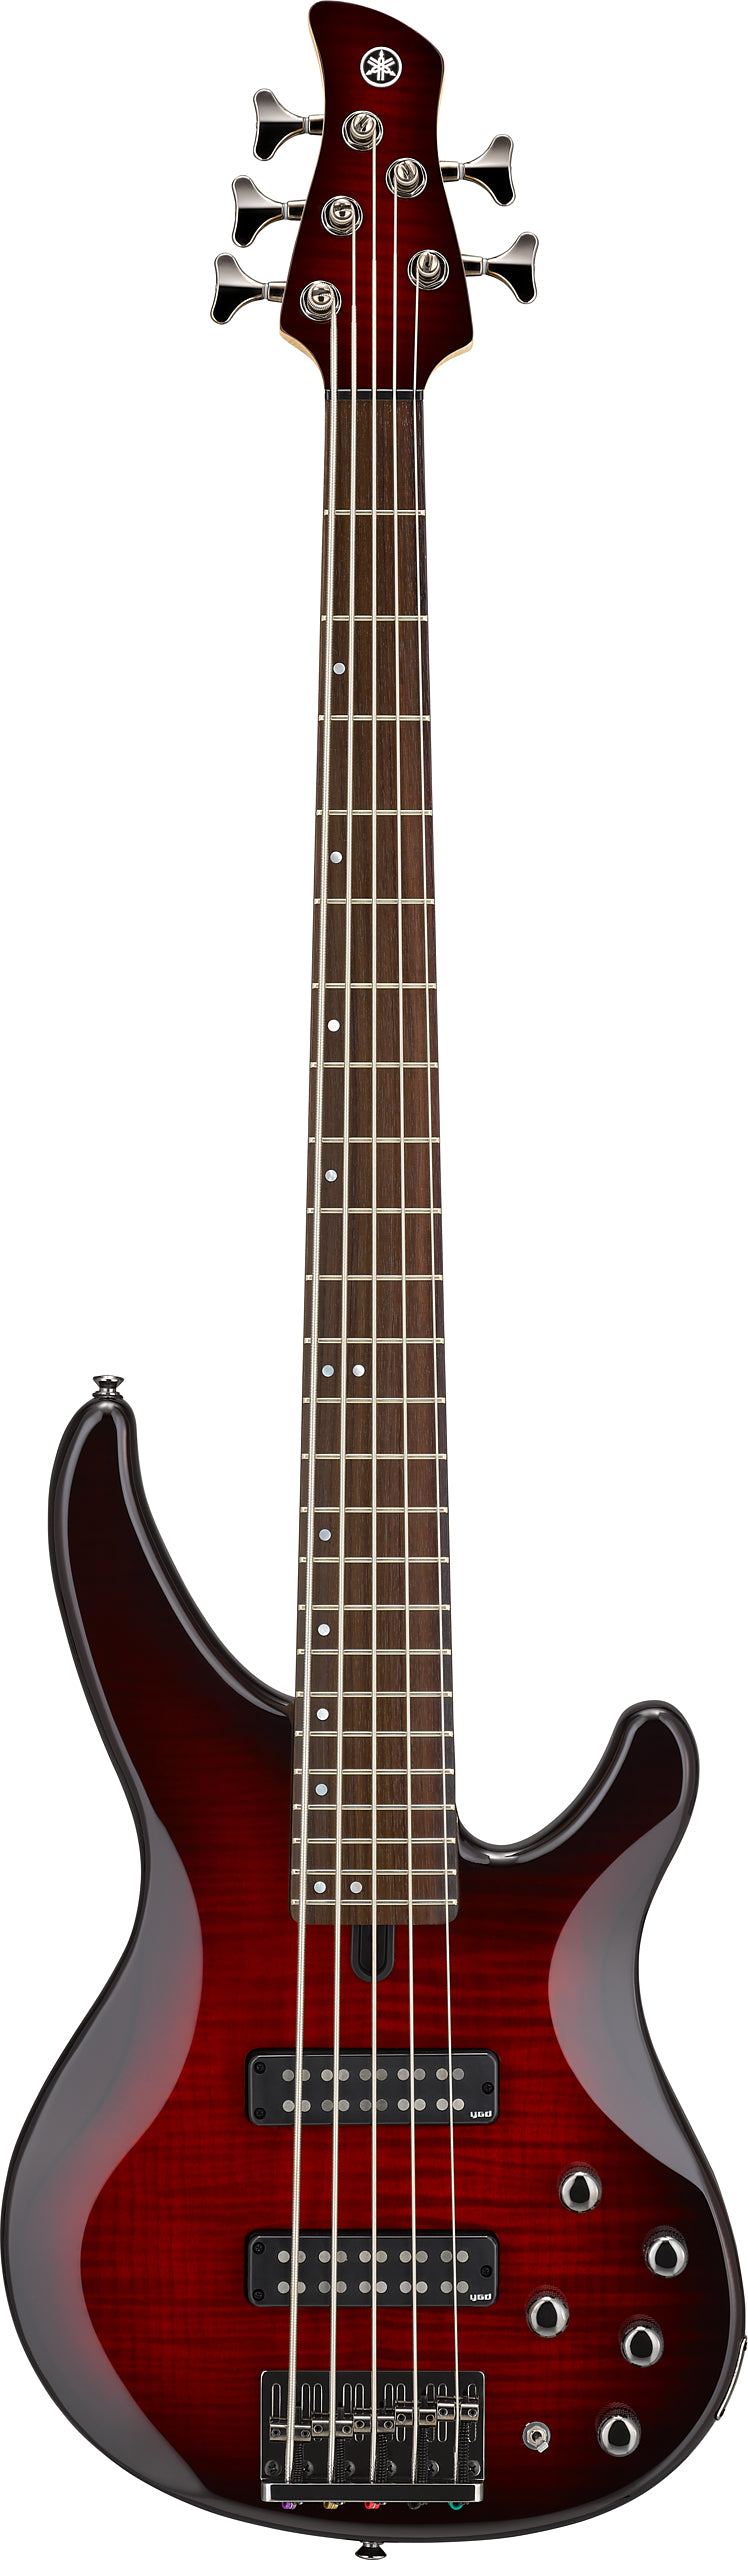 Yamaha TRBX605FM 5-String Electric Bass Guitar